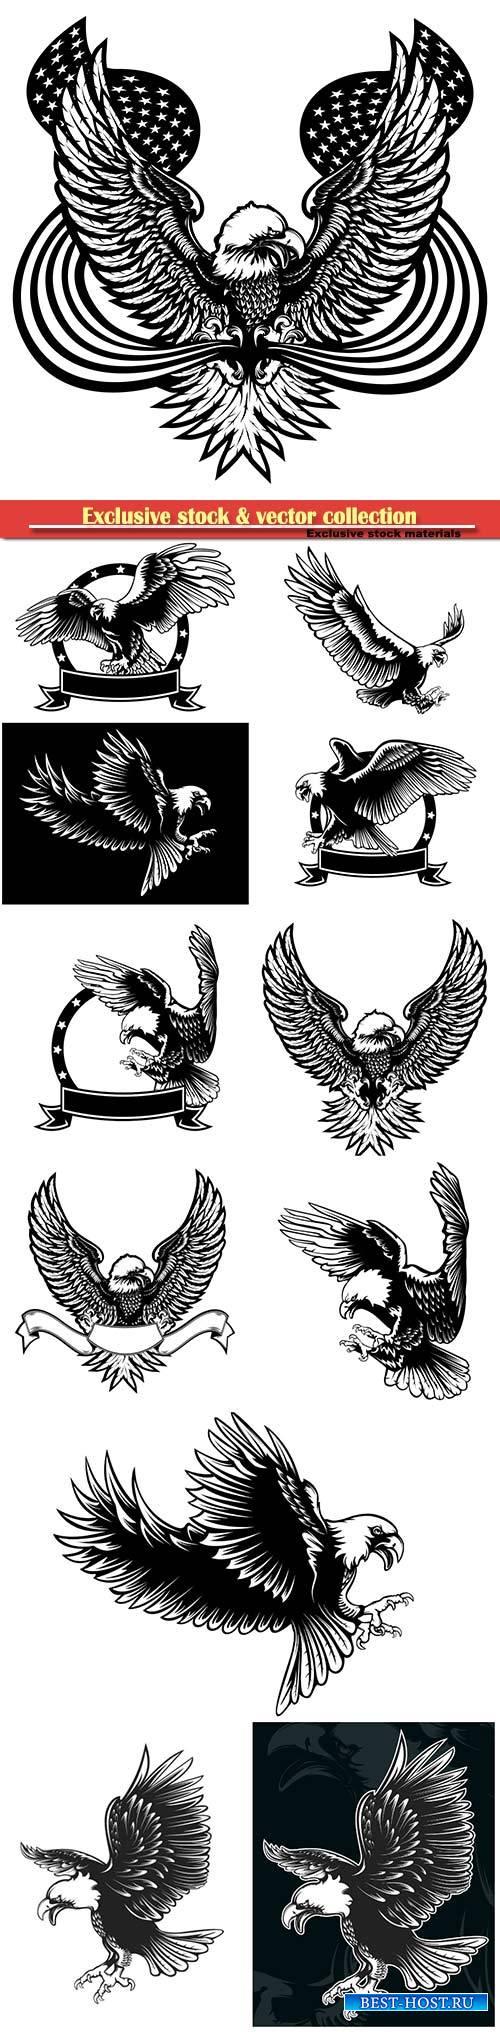 Eagle emblem vector illustration, world symbol of freedom and independence